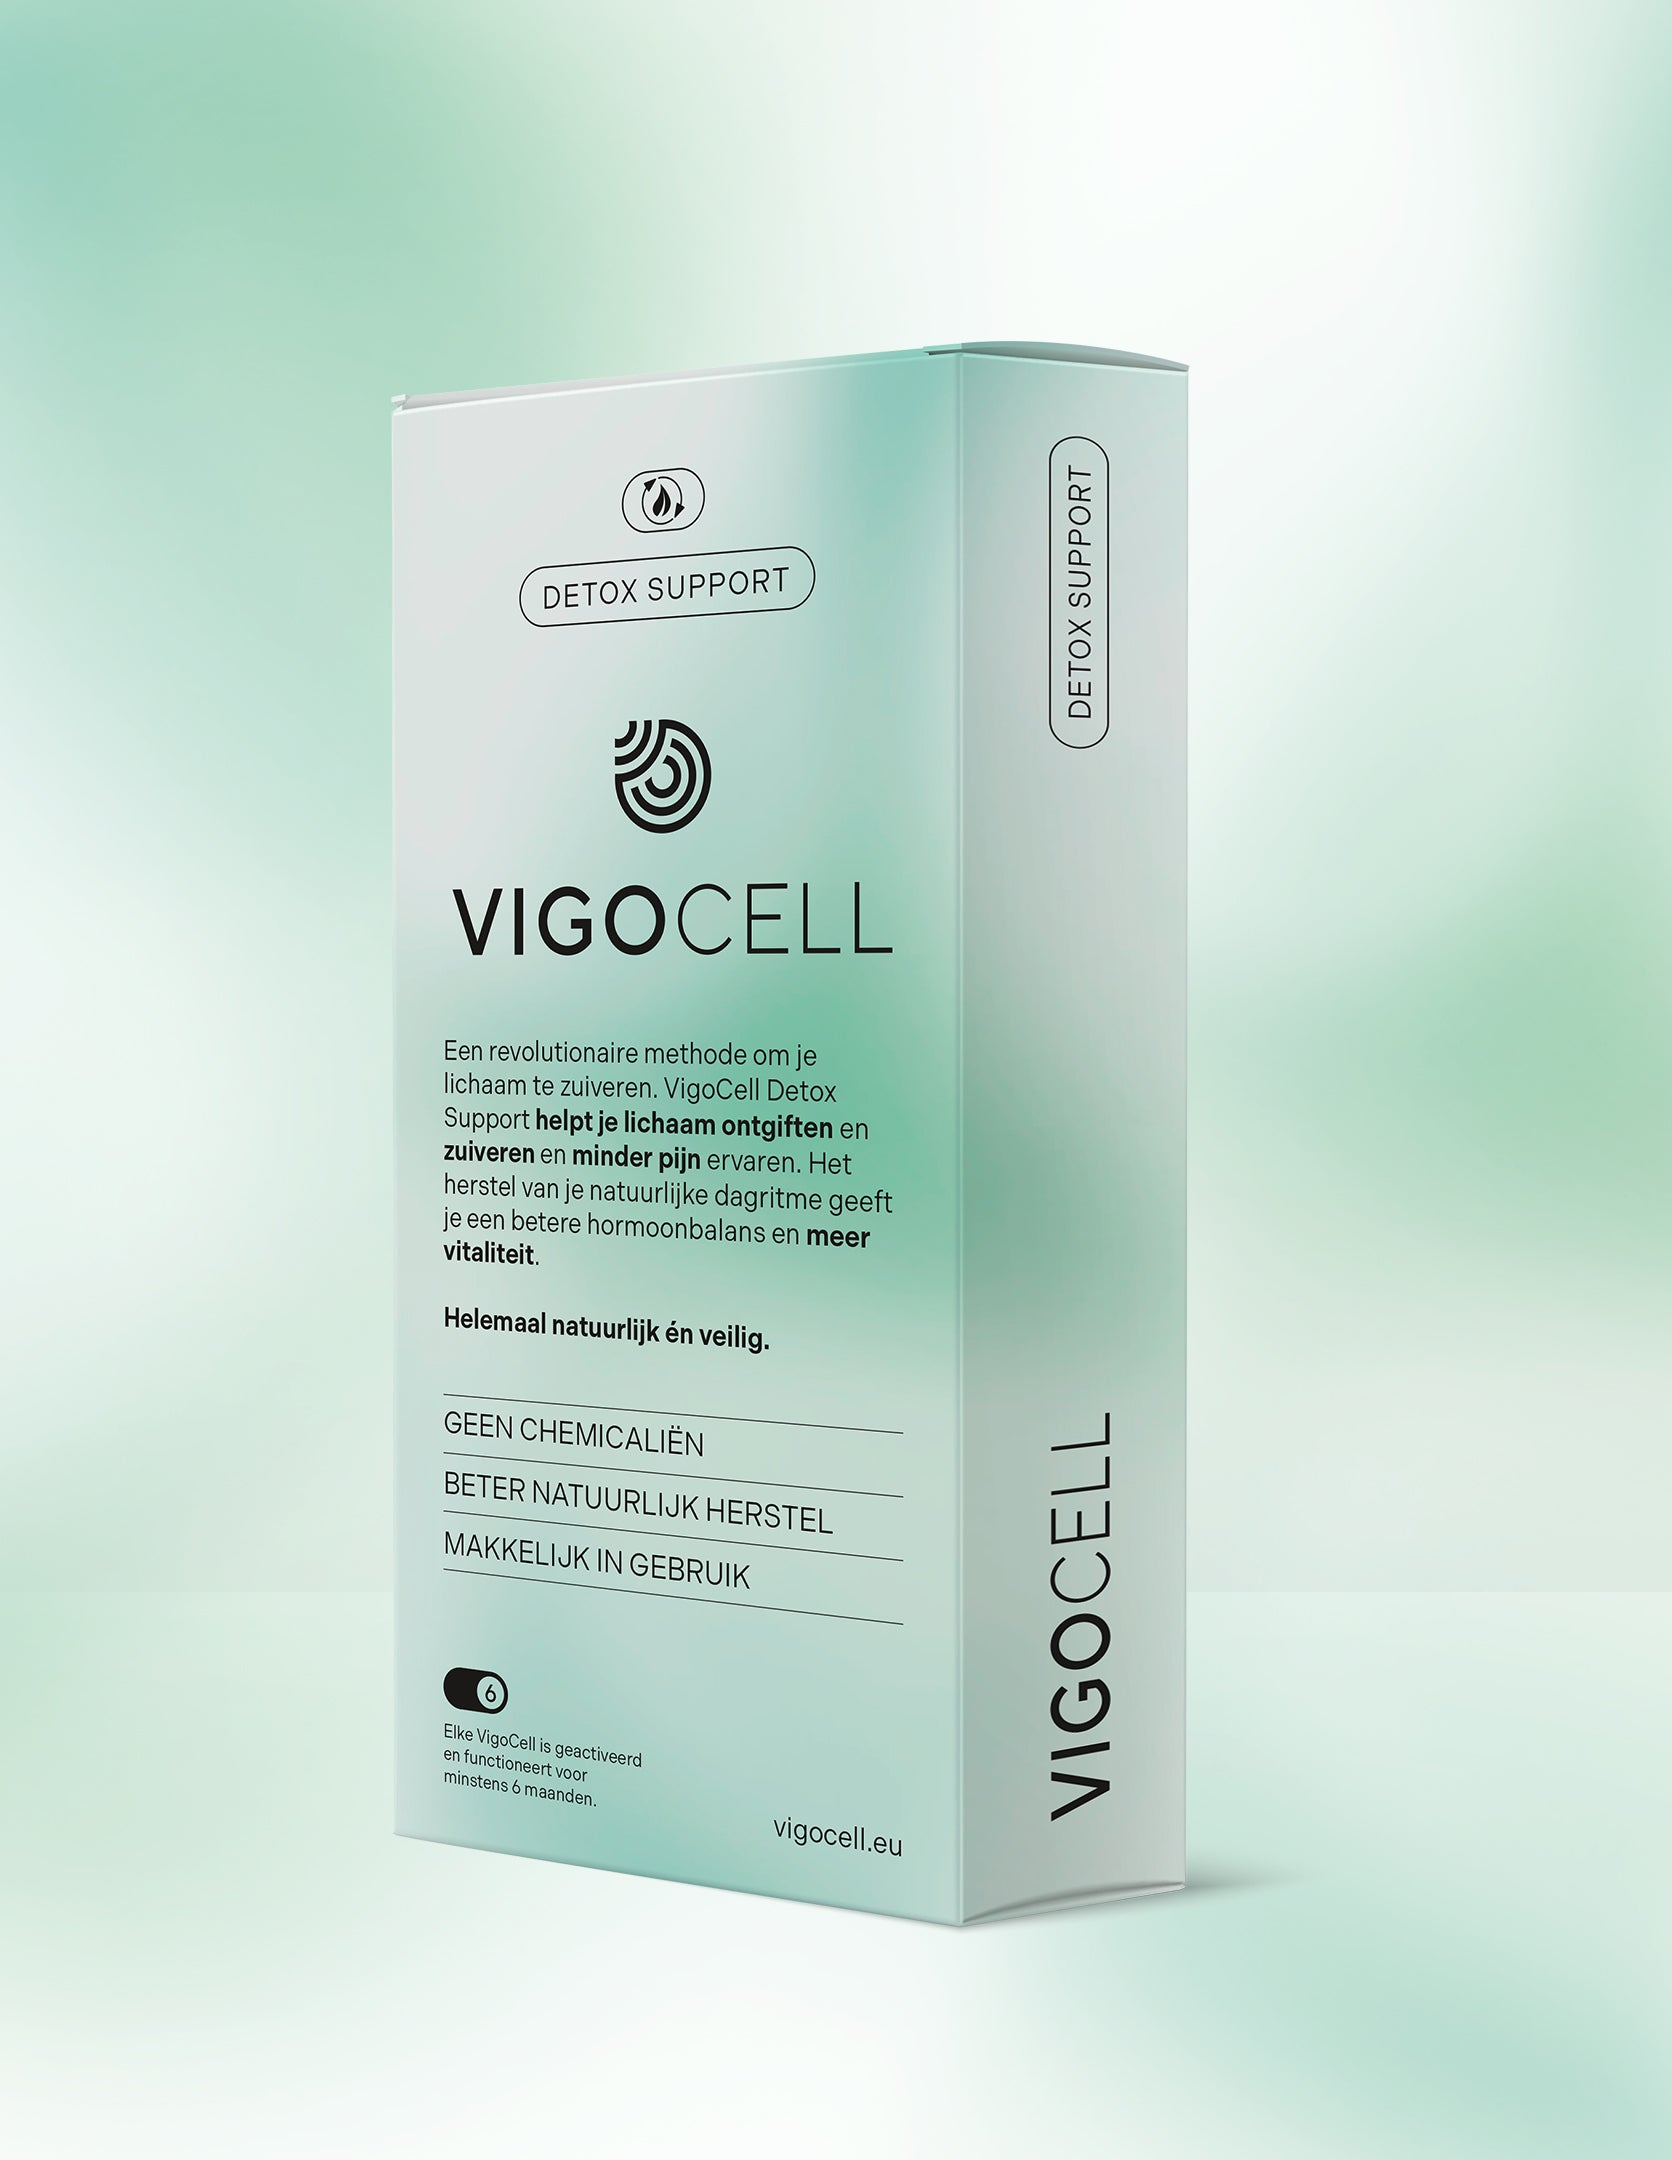 VigoCell Detox Support verpakking